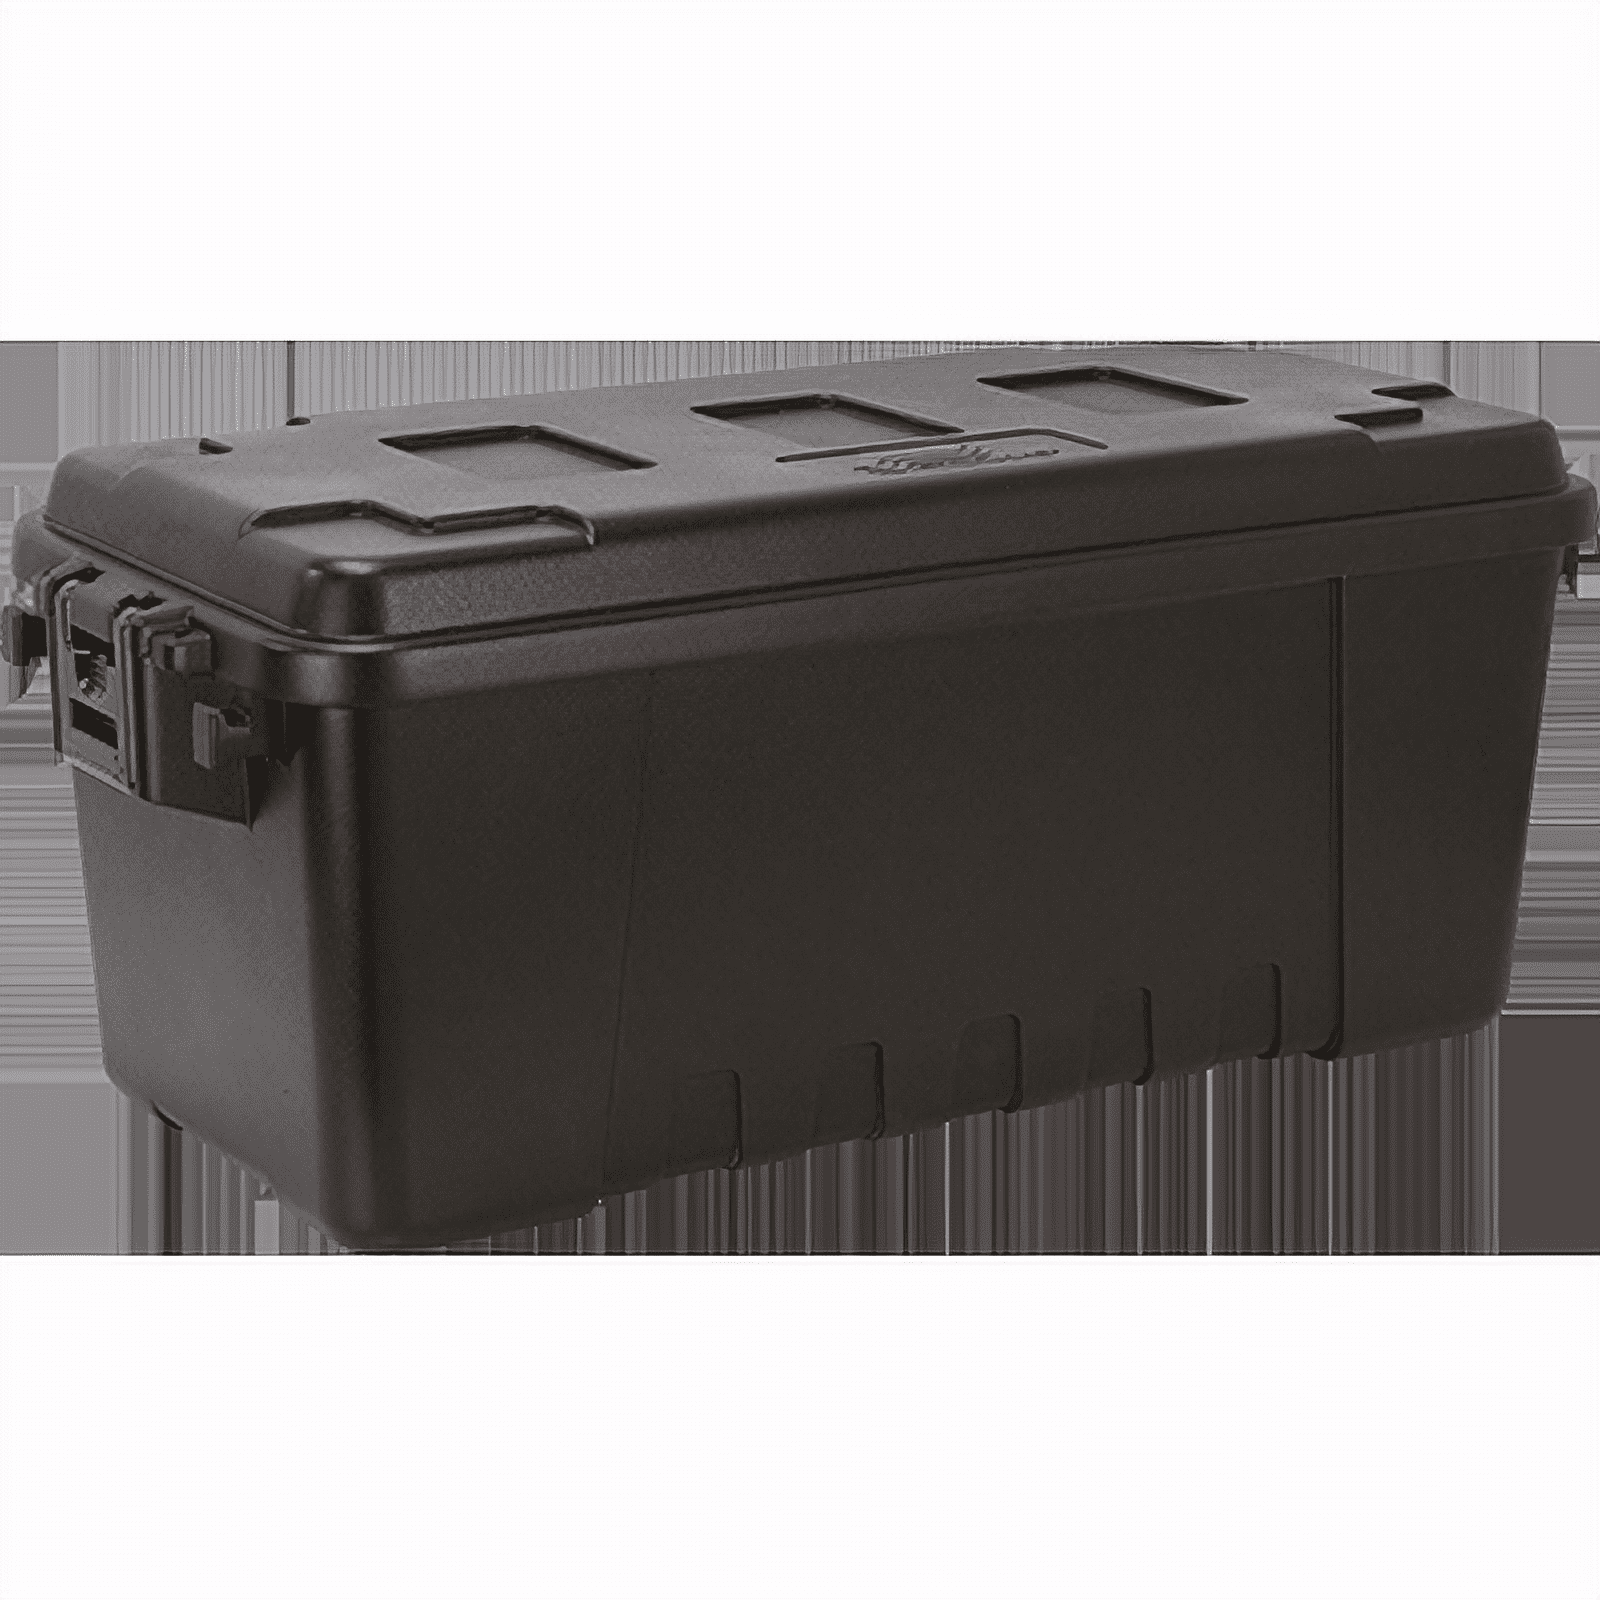 Plano Sportsman's Trunk, Black, 68-Quart Lockable Plastic Storage Box, Home